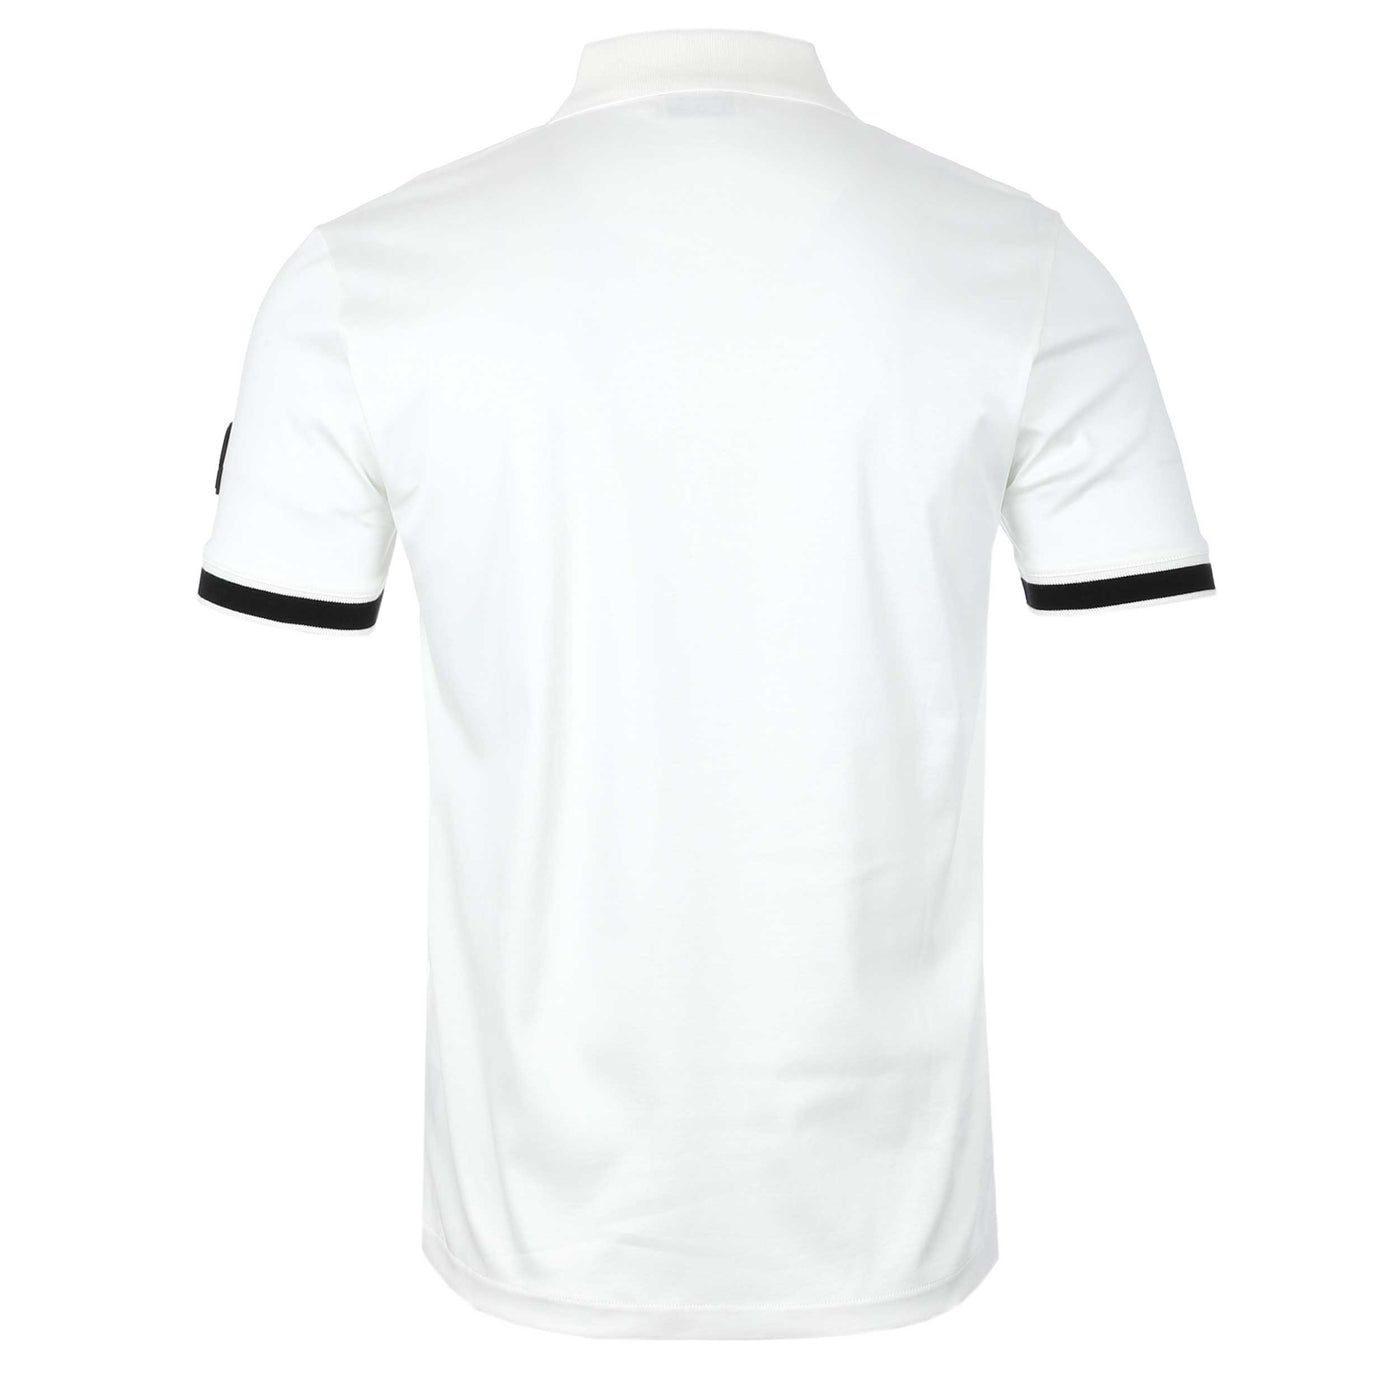 Sandbanks Silicone Zip Polo Shirt in White Back